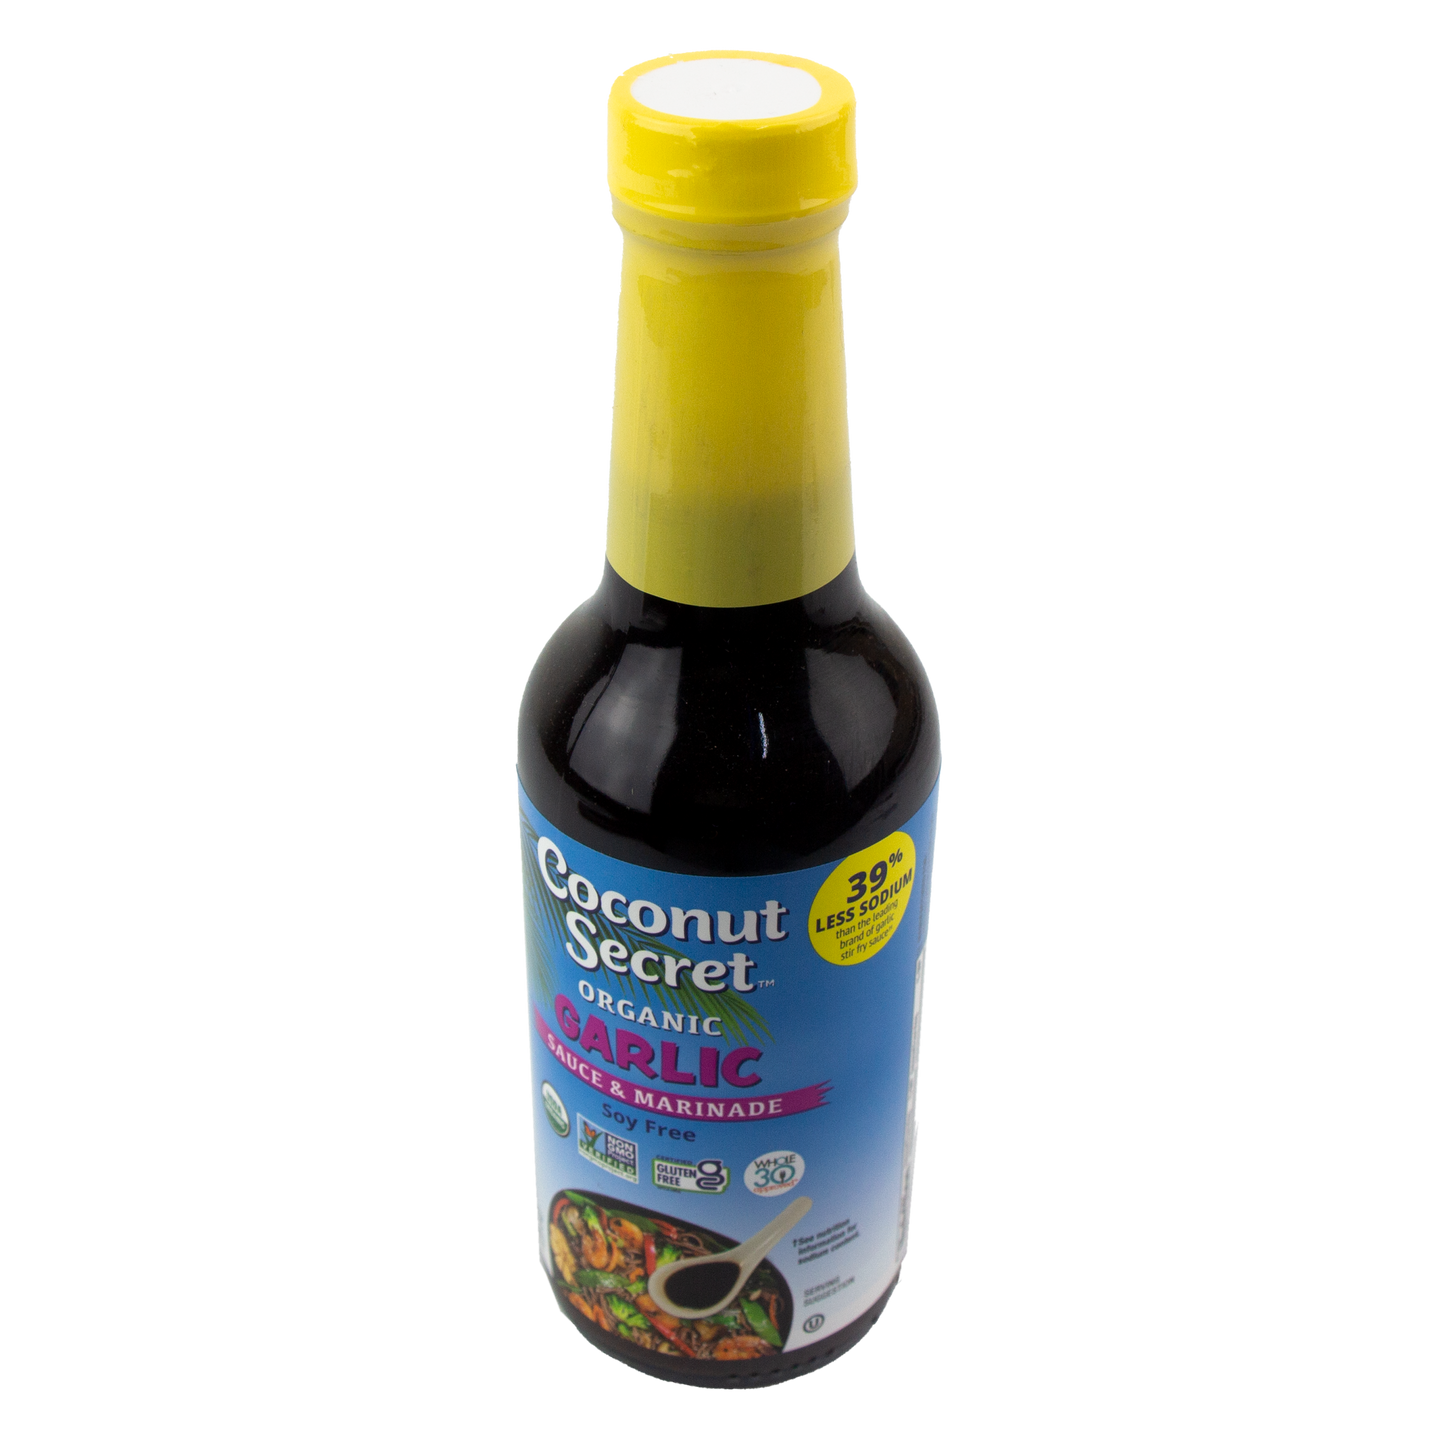 Coconut Secret - Garlic Sauce (10 oz)